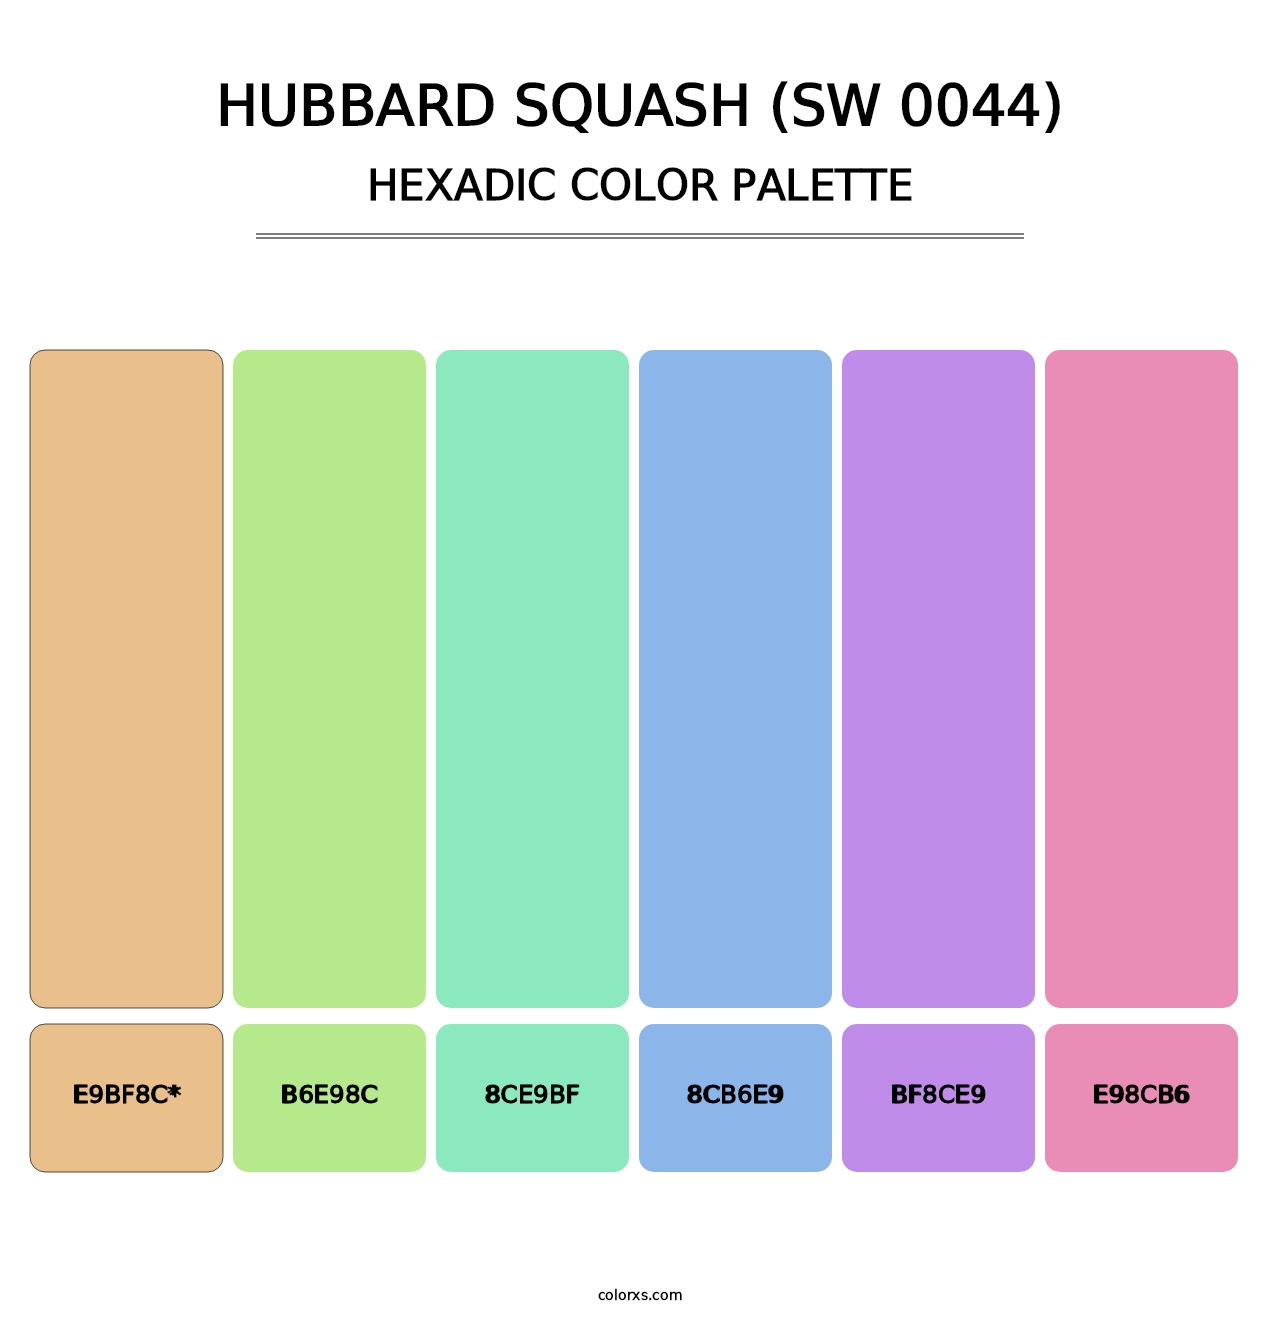 Hubbard Squash (SW 0044) - Hexadic Color Palette